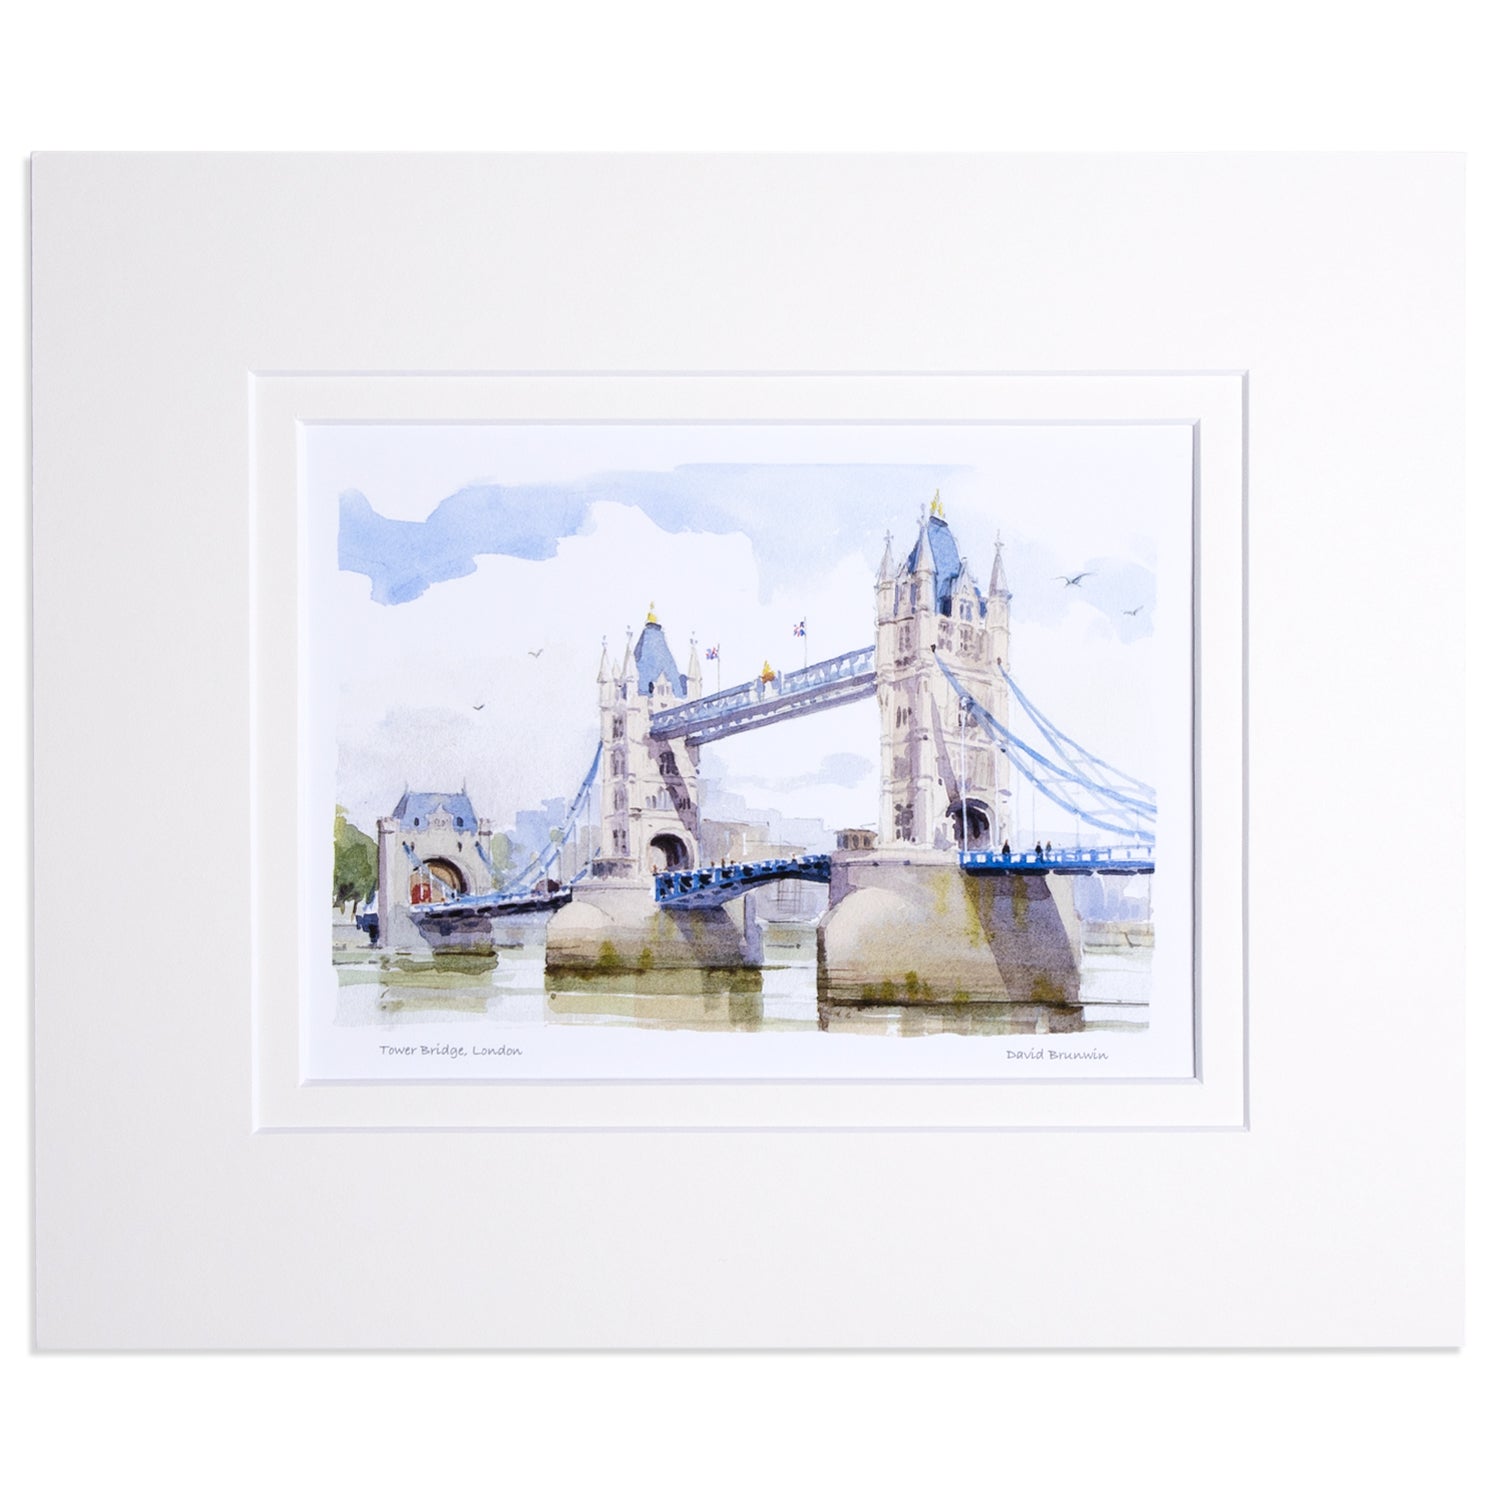 Tower Bridge Mounted Print by David Brunwin